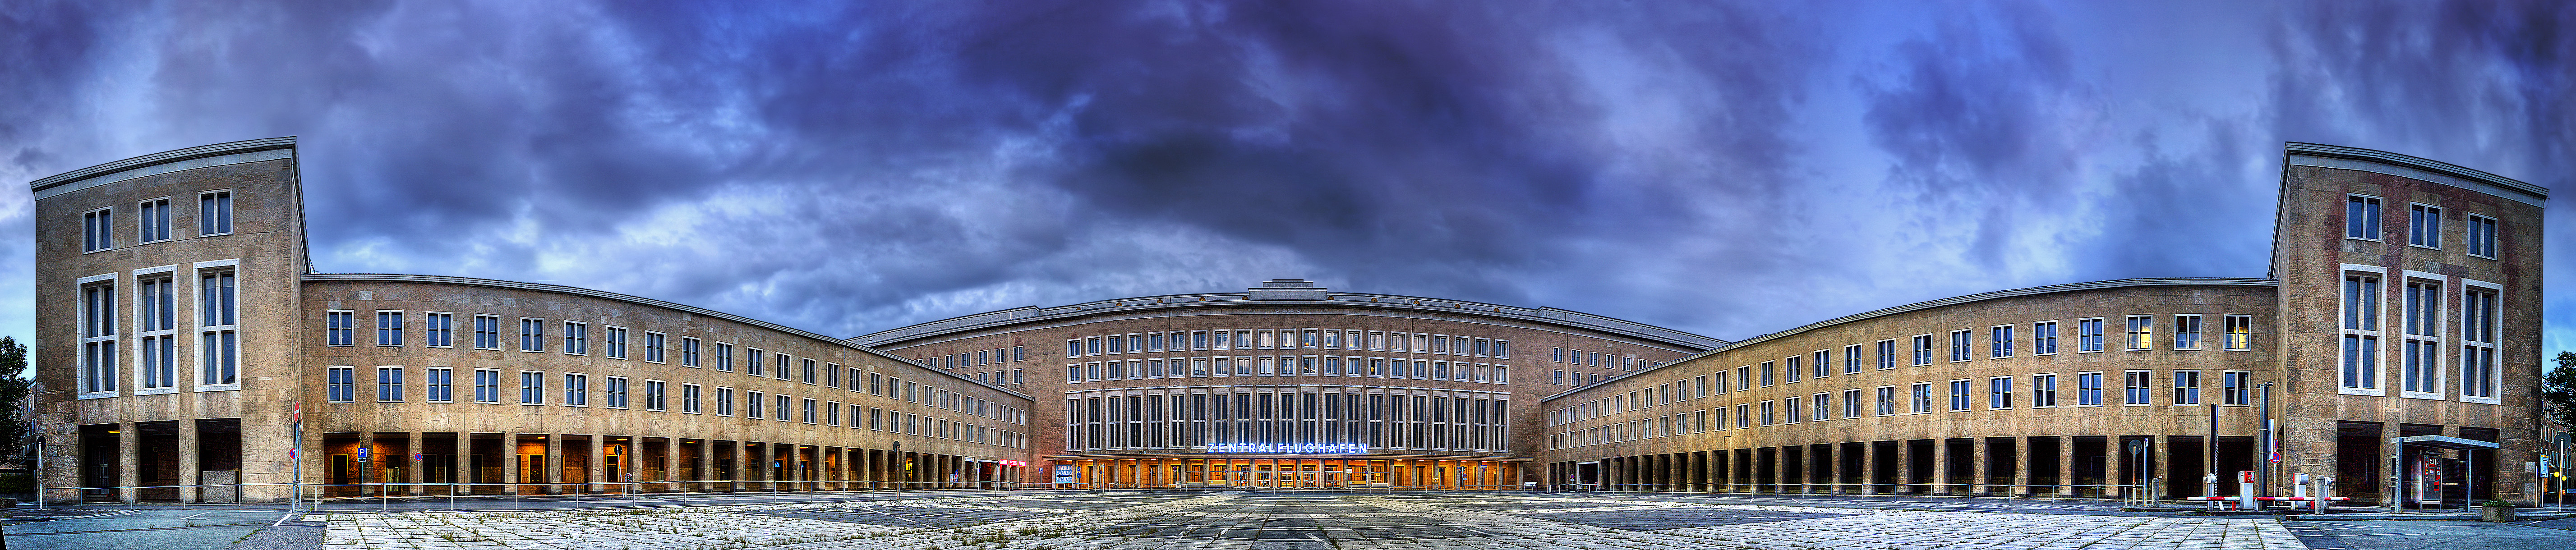 Flughafen Tempelhof Parkplatz und Eingang zum Terminal. 300°-Foto: Ajan Hannemann, CC-BY-SA-3.0 via Wikimedia Commons